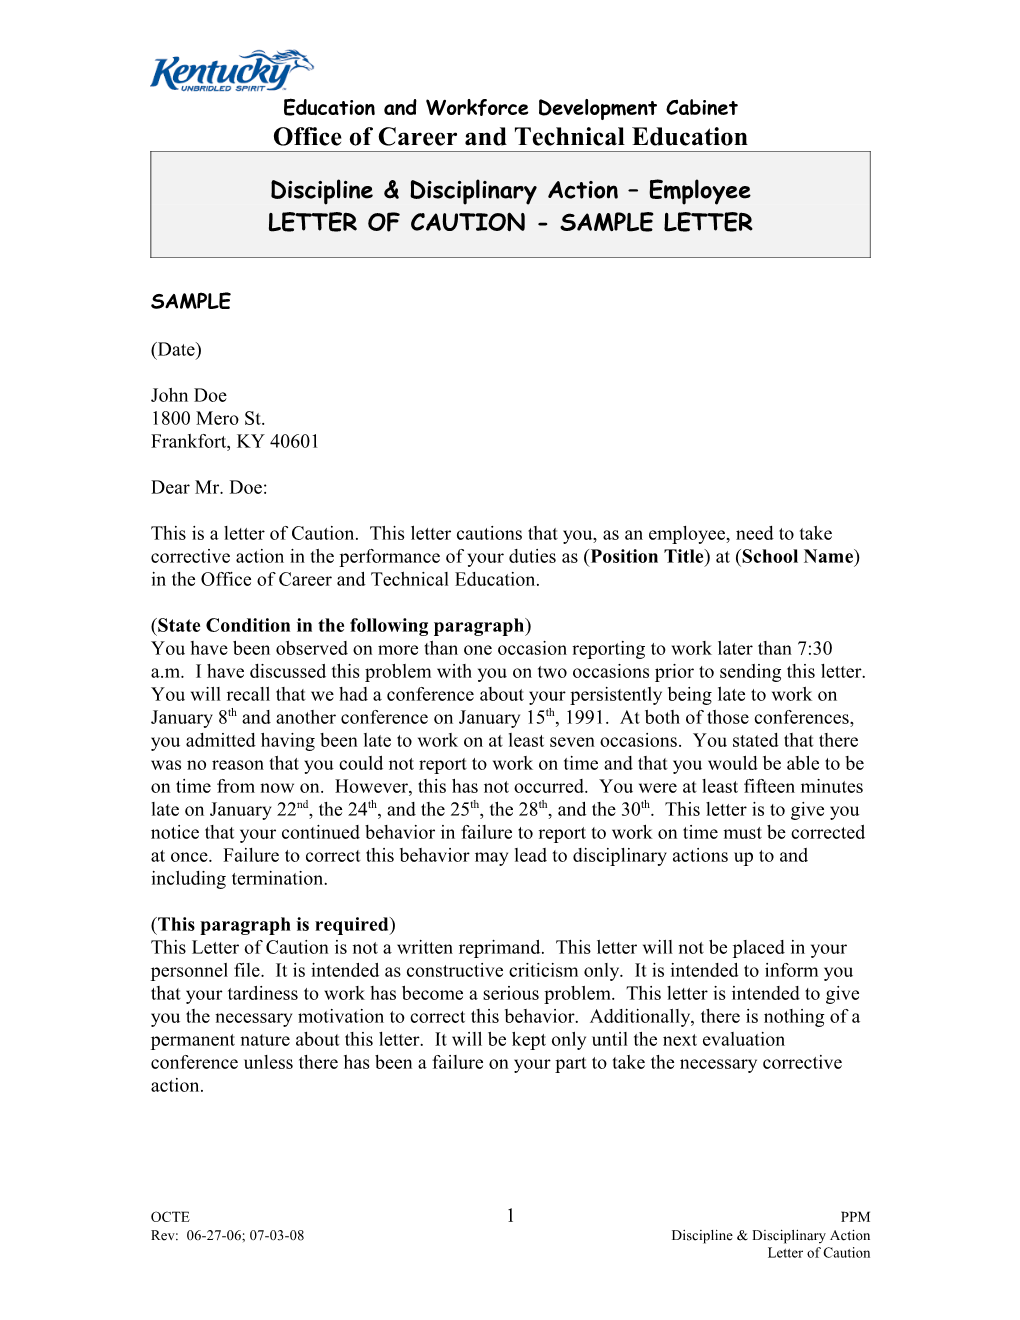 Discipline Employee Letter Of Caution 151B